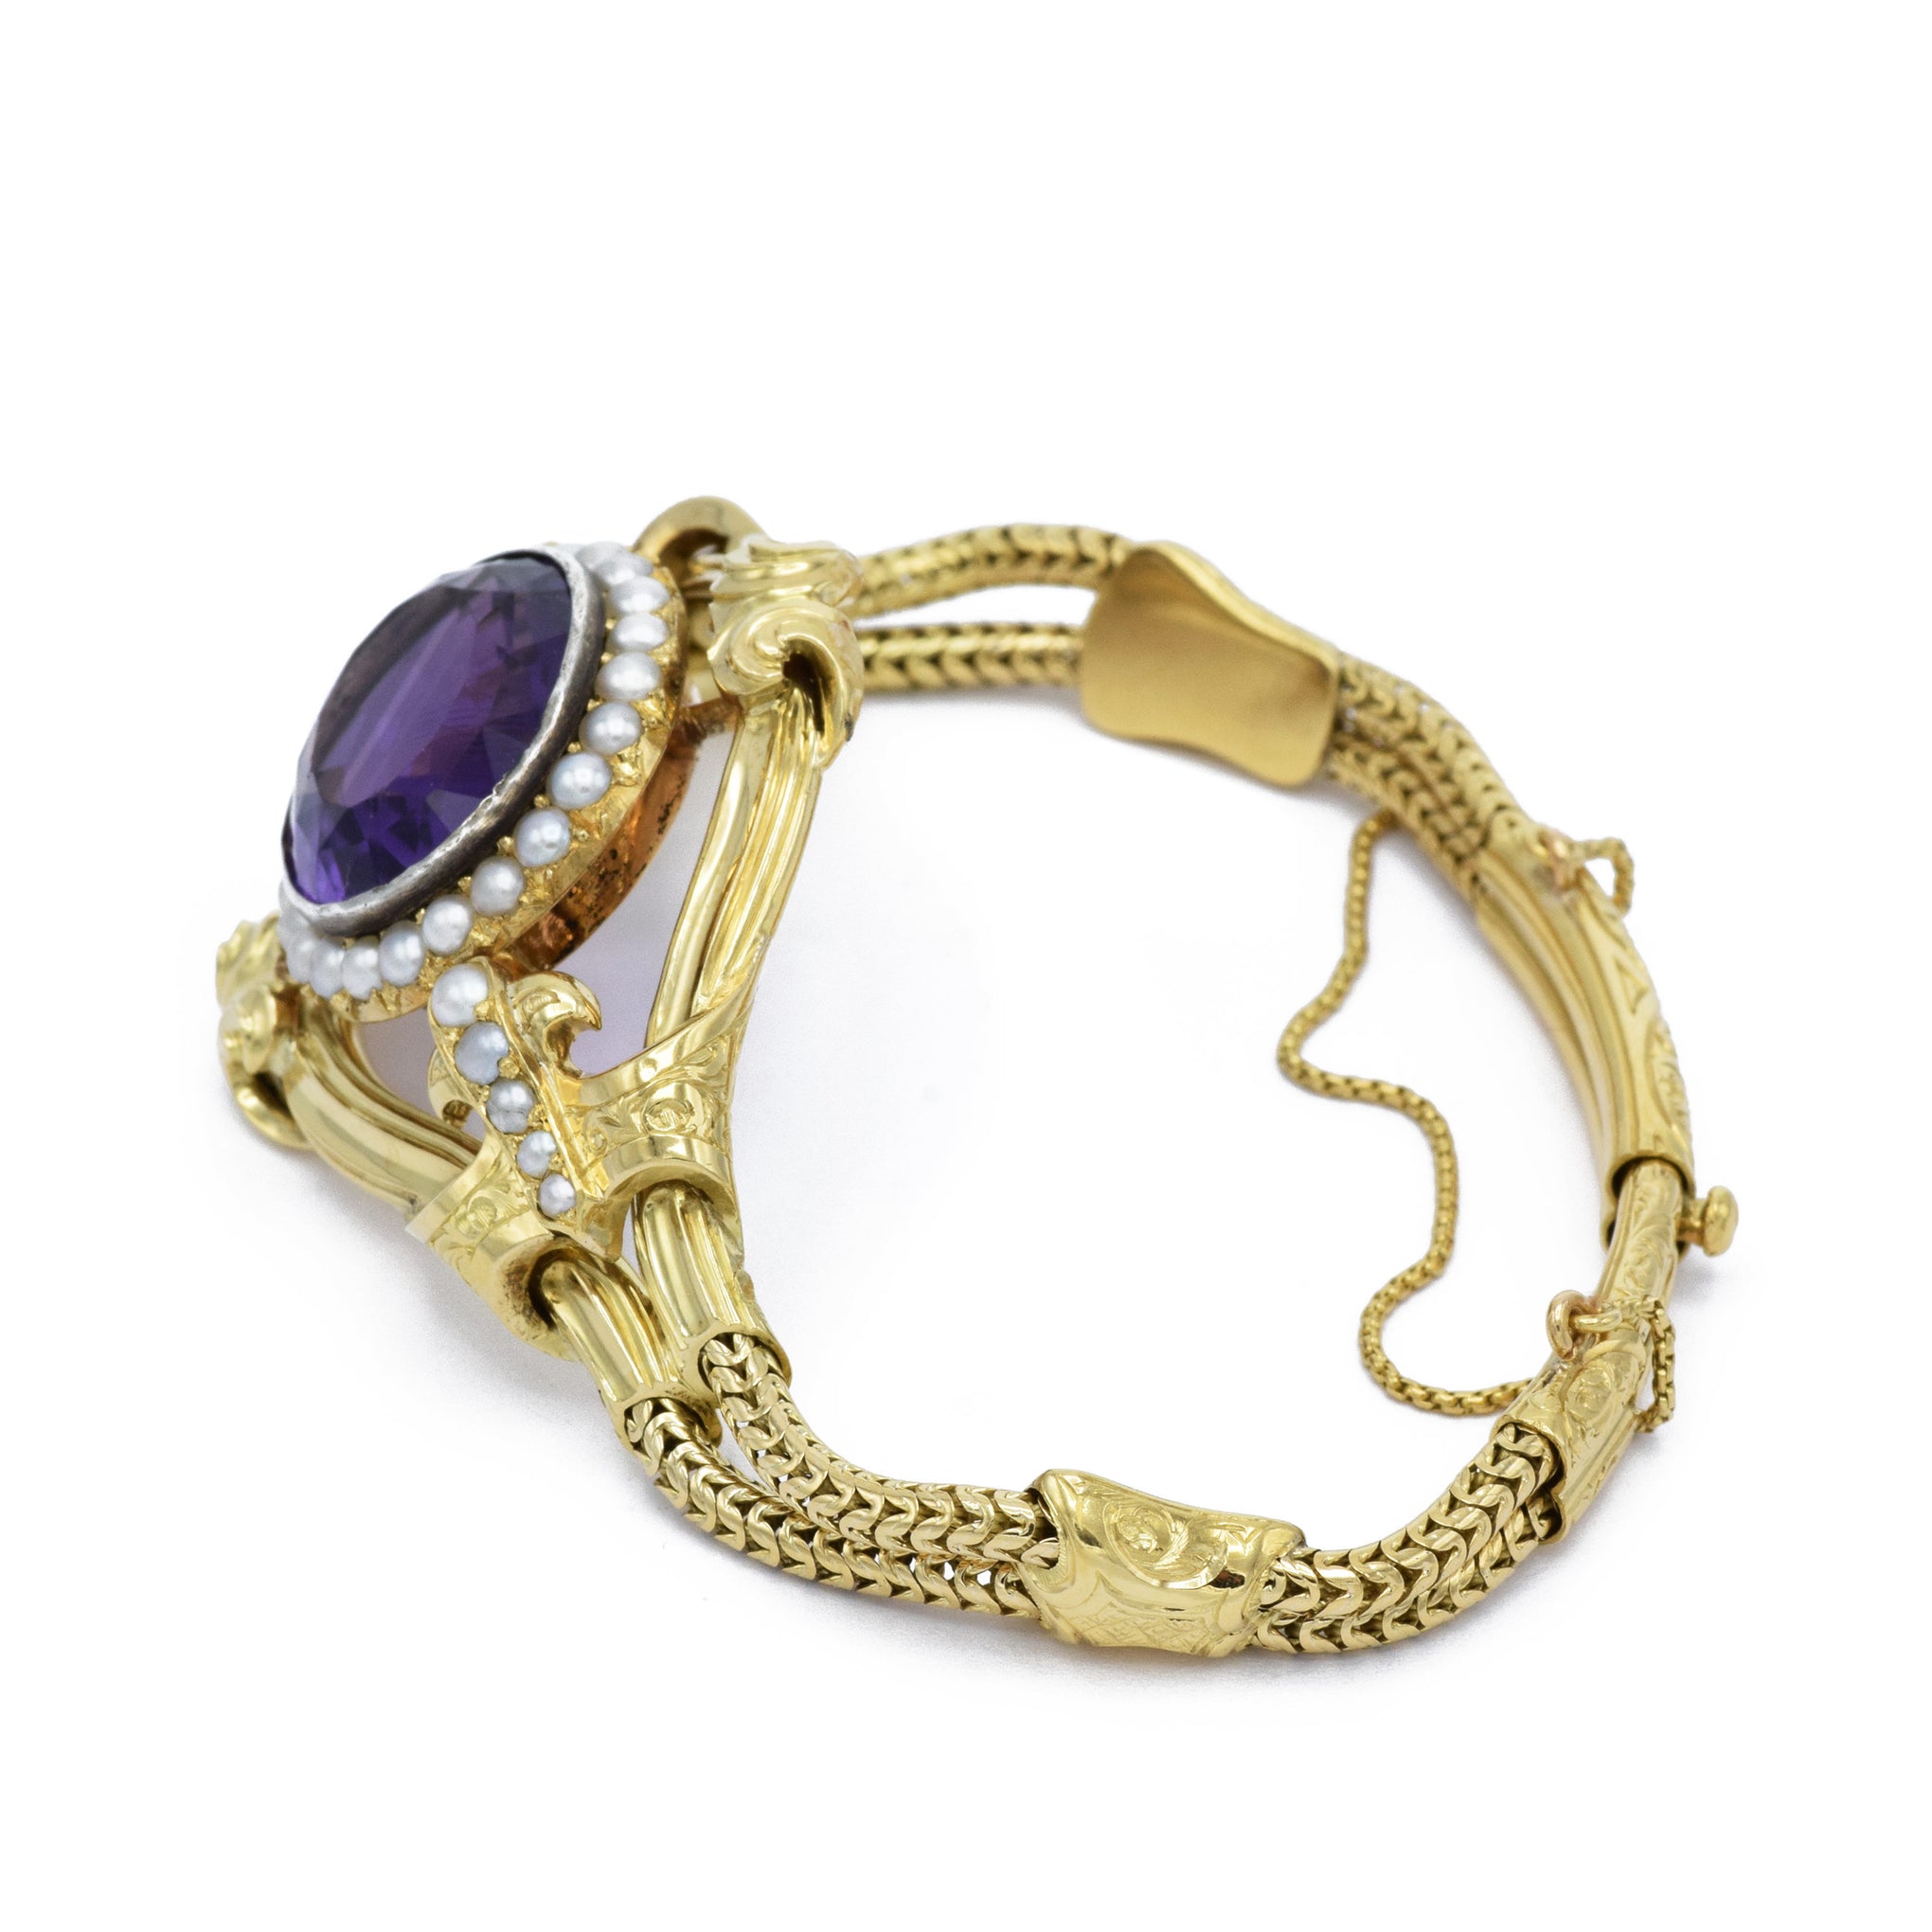 Estate Gold, Amethyst, and Pearl Bracelet, Victorian Era